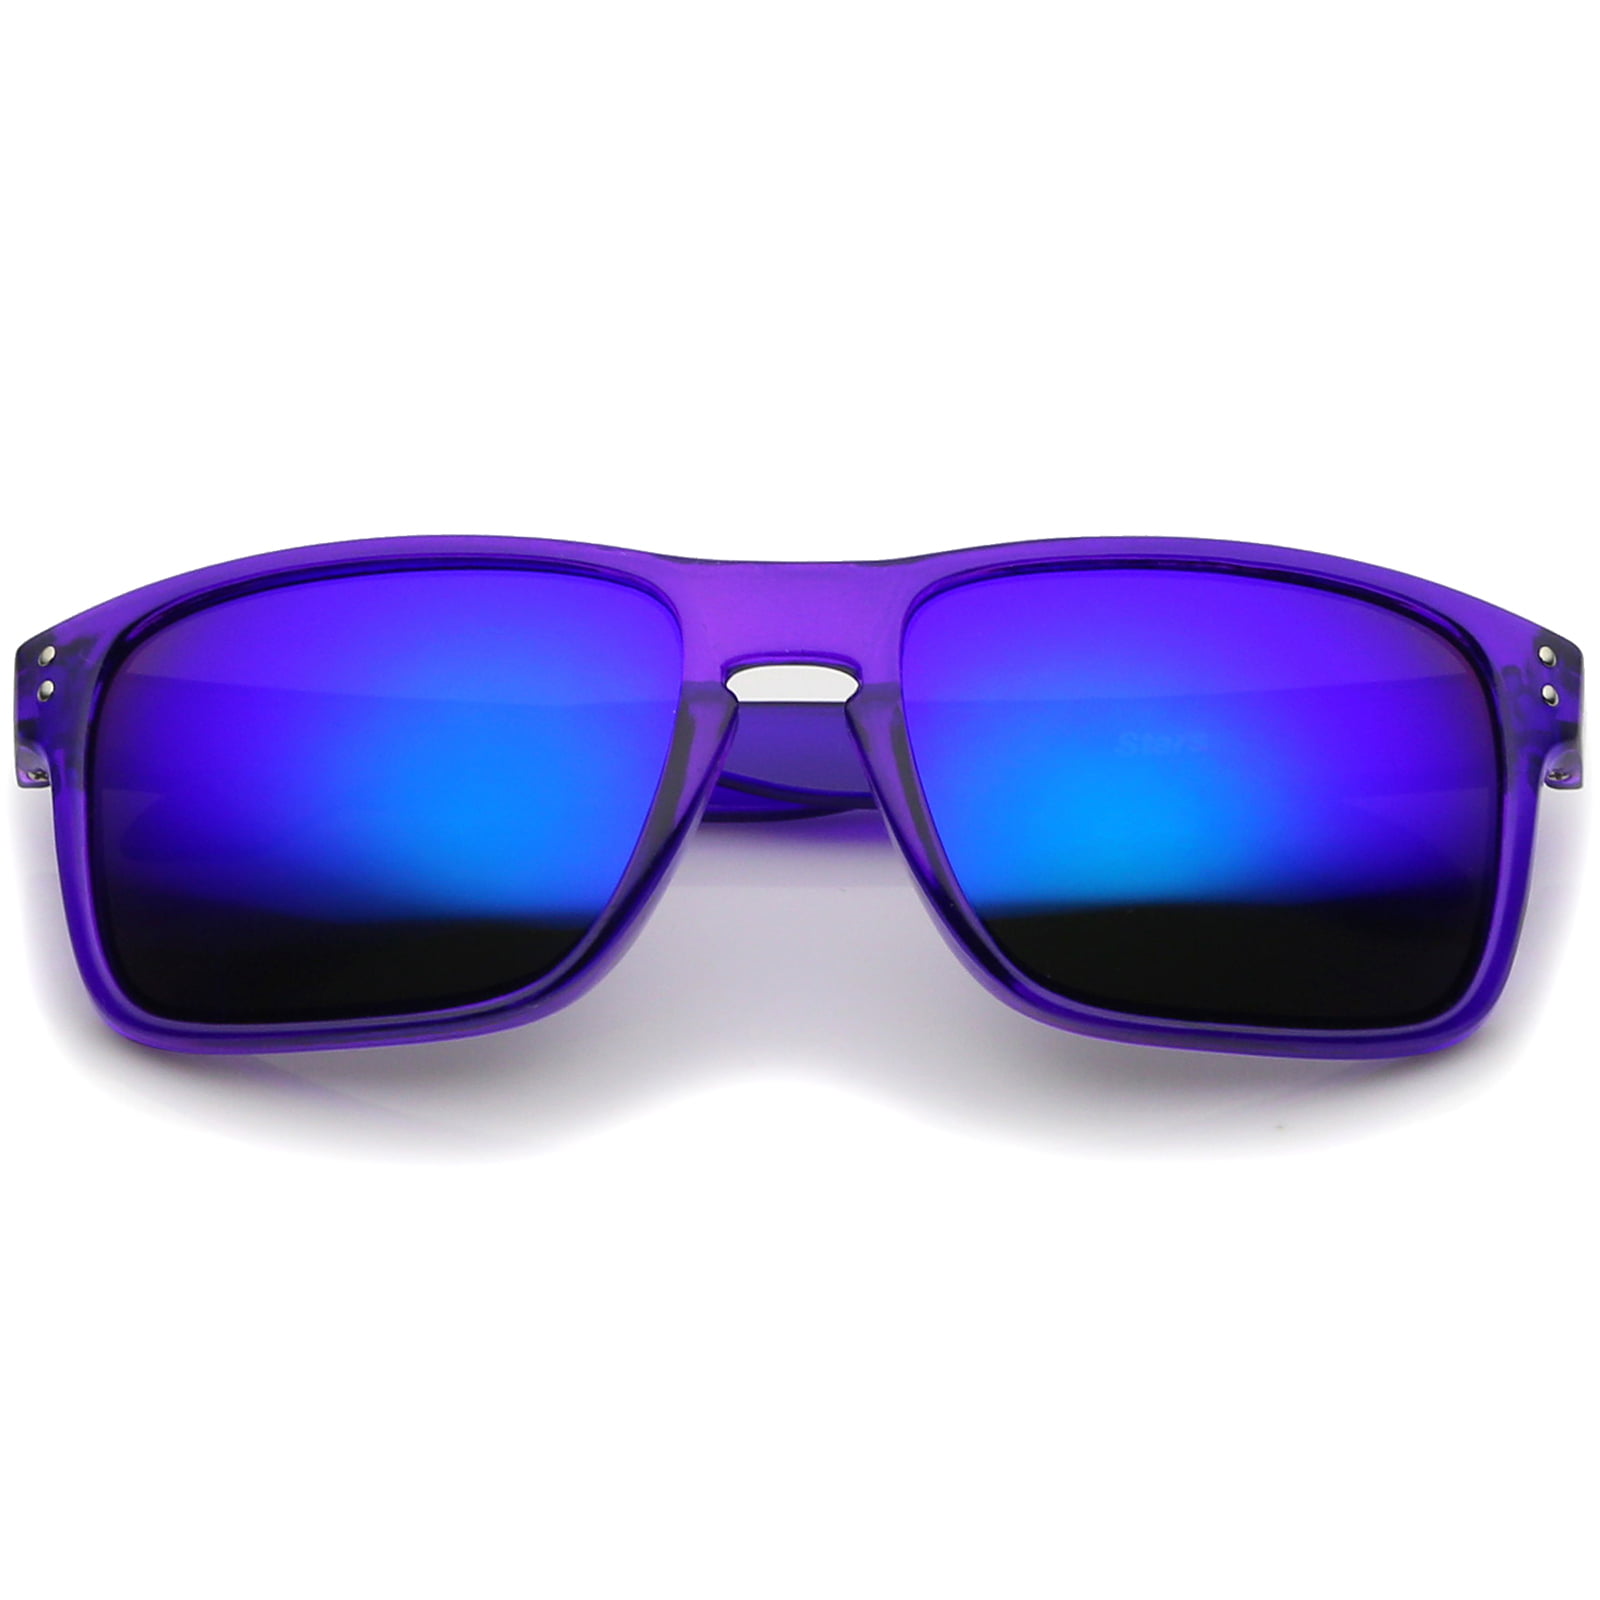 Sunglass La Translucent Colored Mirror Square Lens Horn Rimmed Sunglasses 57mm Purple